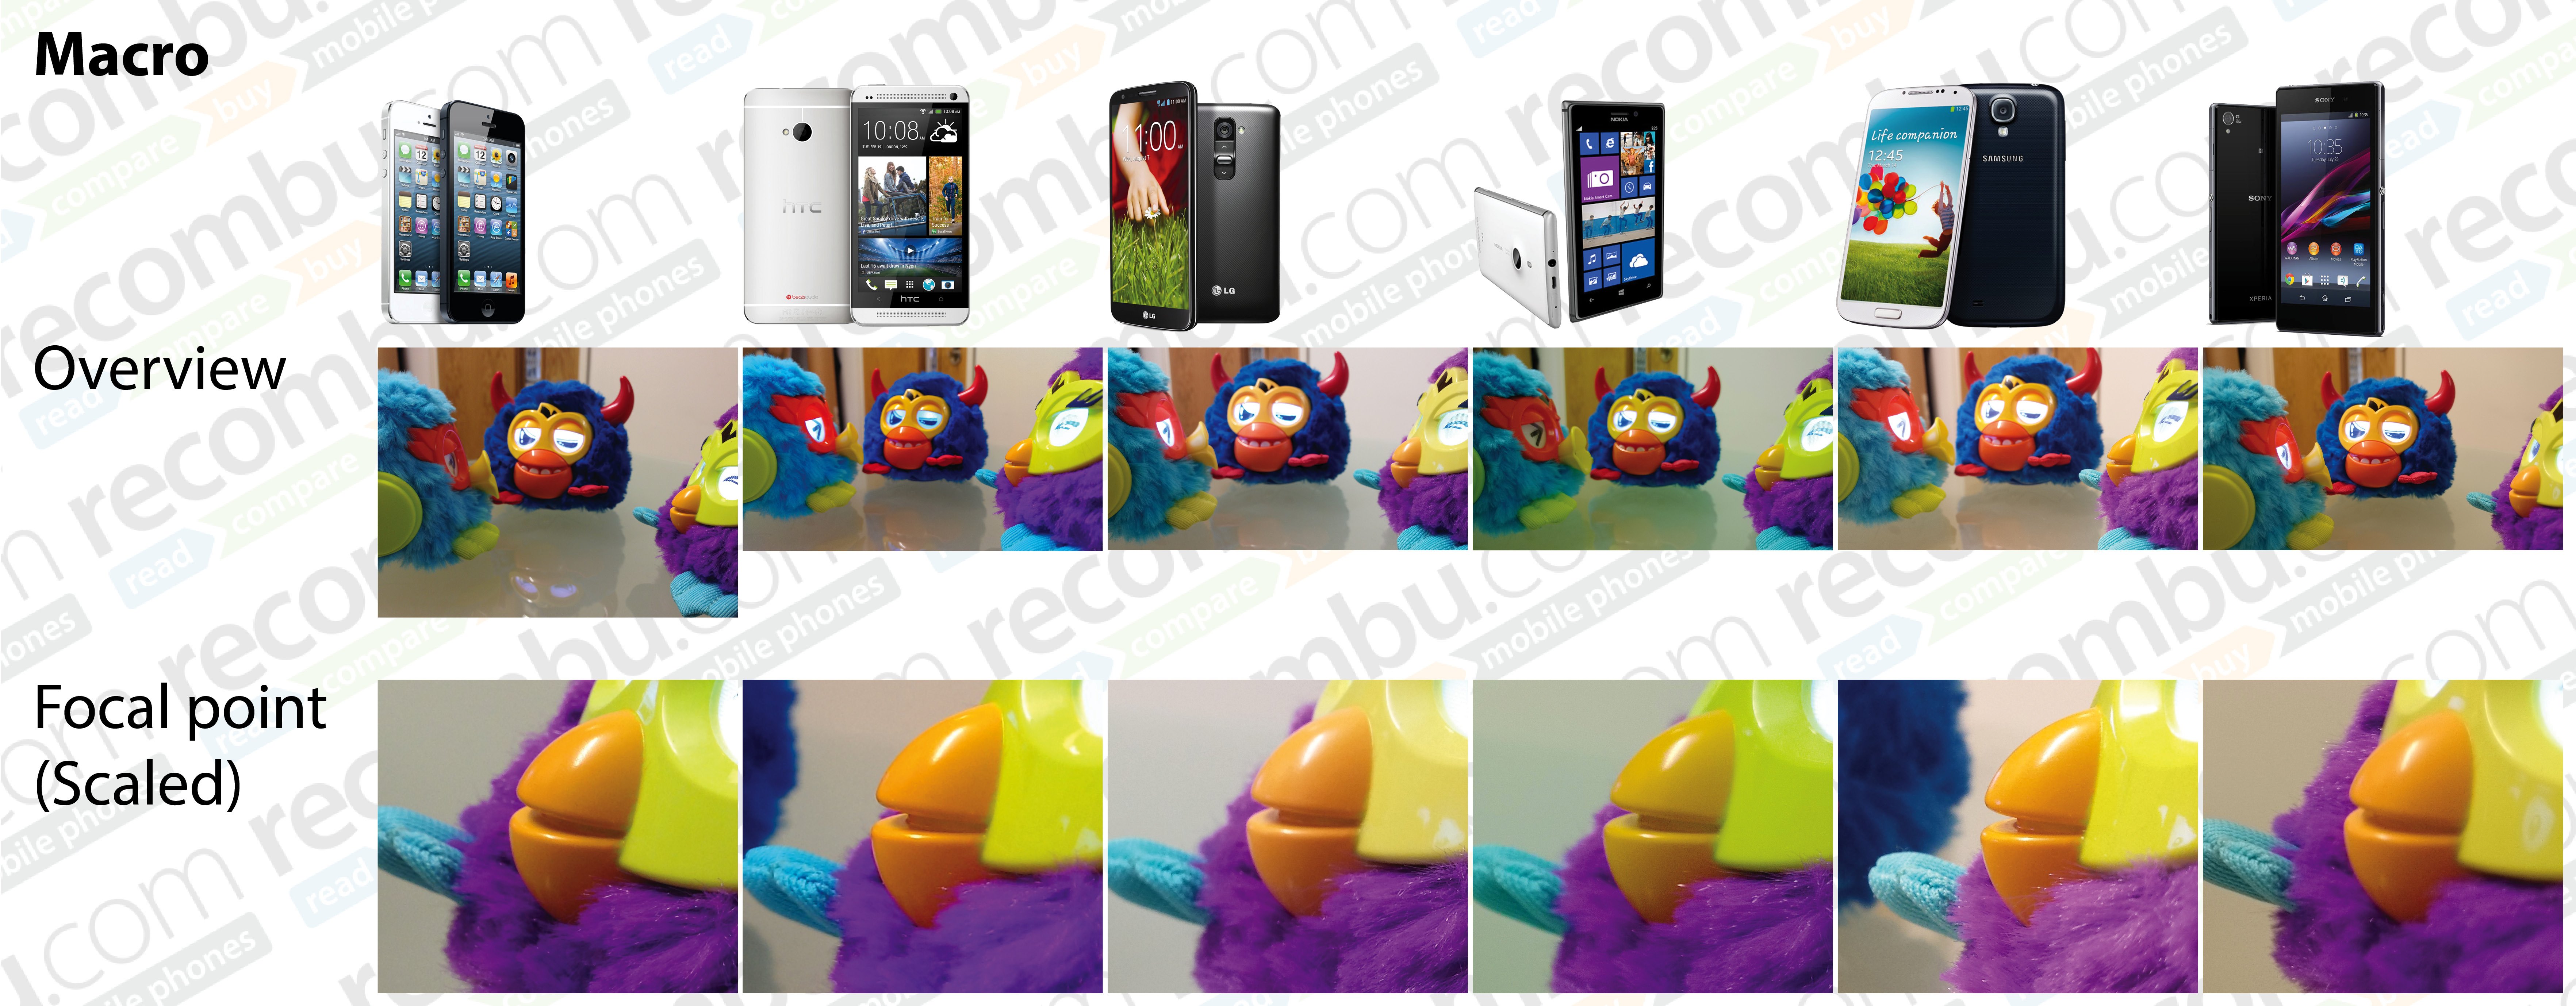 Масштабное сравнение камеры Sony Xperia Z1 с основными соперниками: HTC One, LG G2, Lumia 925, Galaxy S4 и iPhone 5